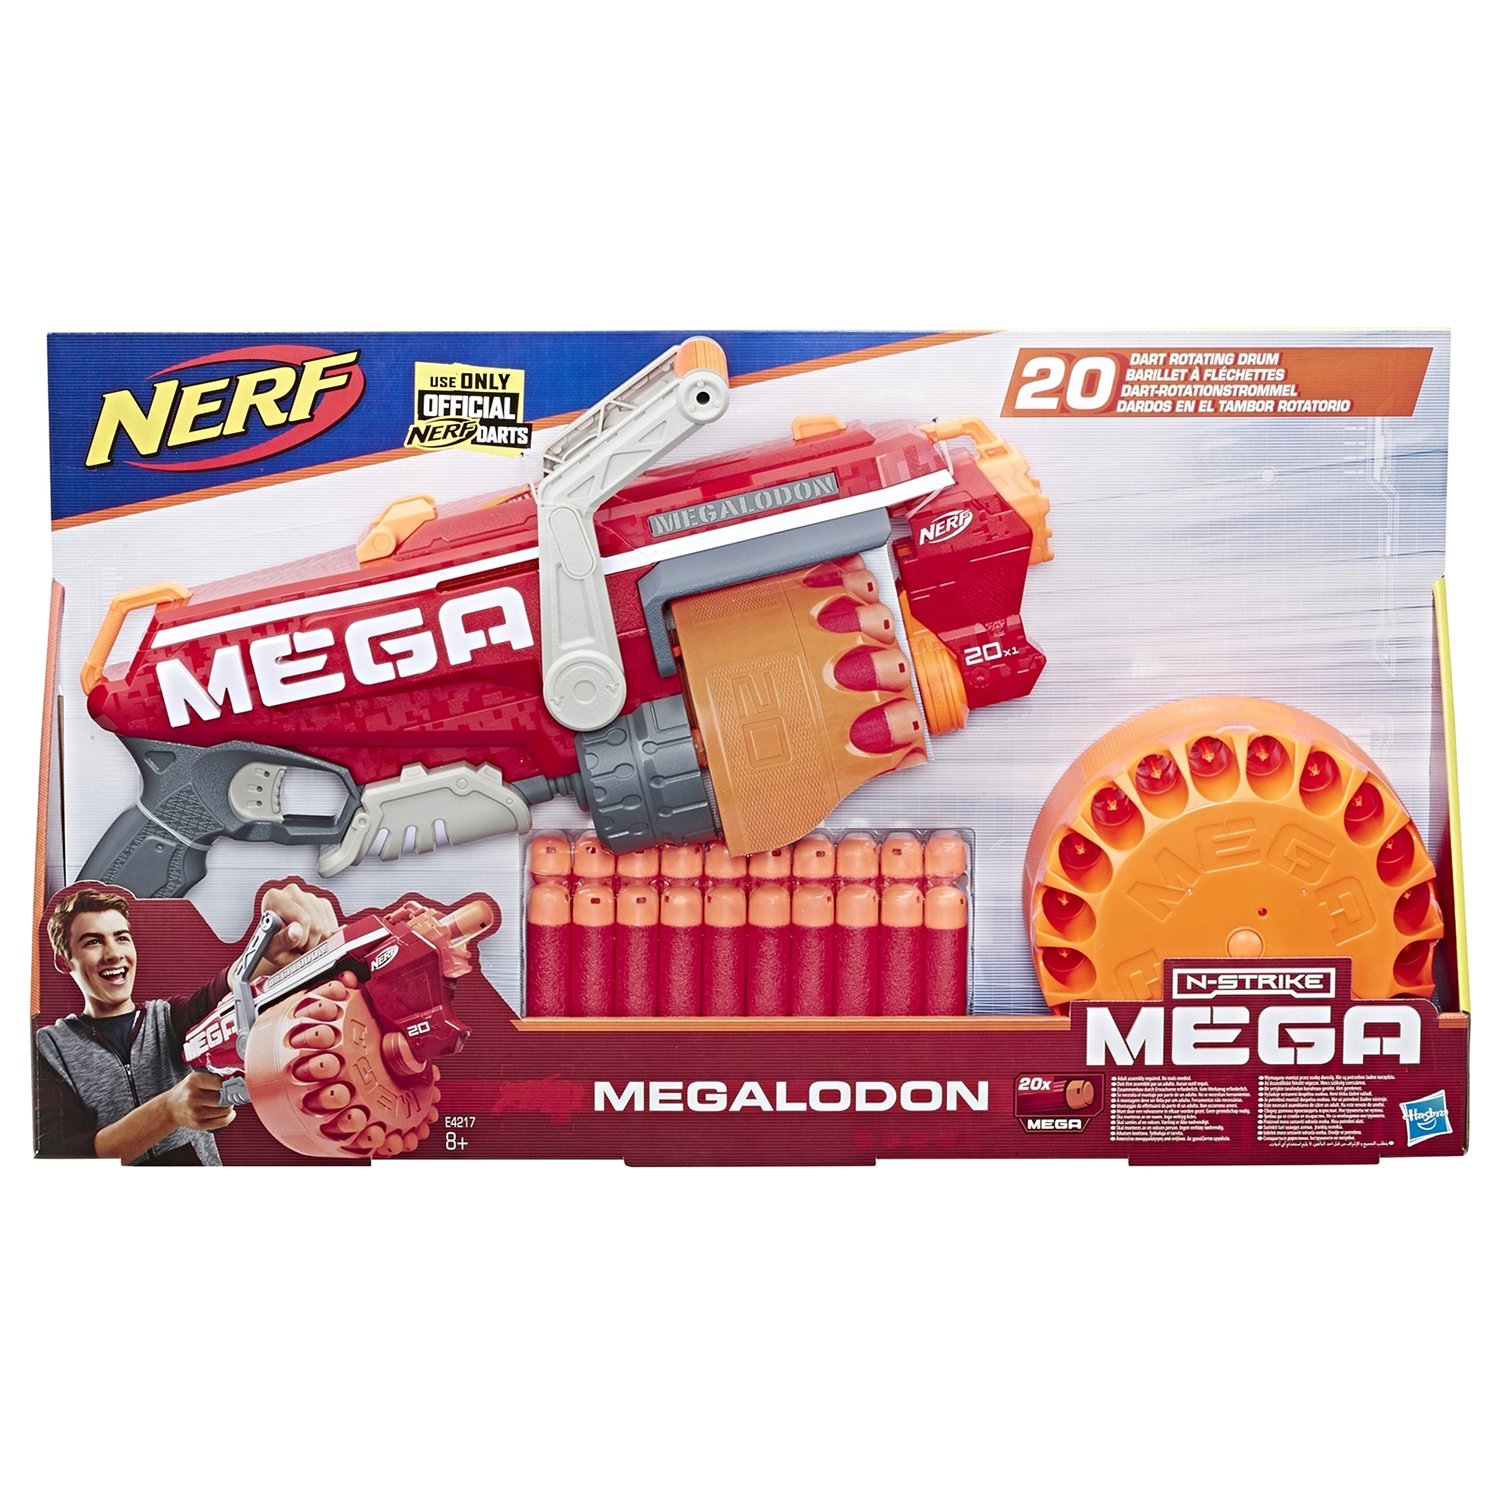 Бластер Nerf Мега E4217 Мегалодон